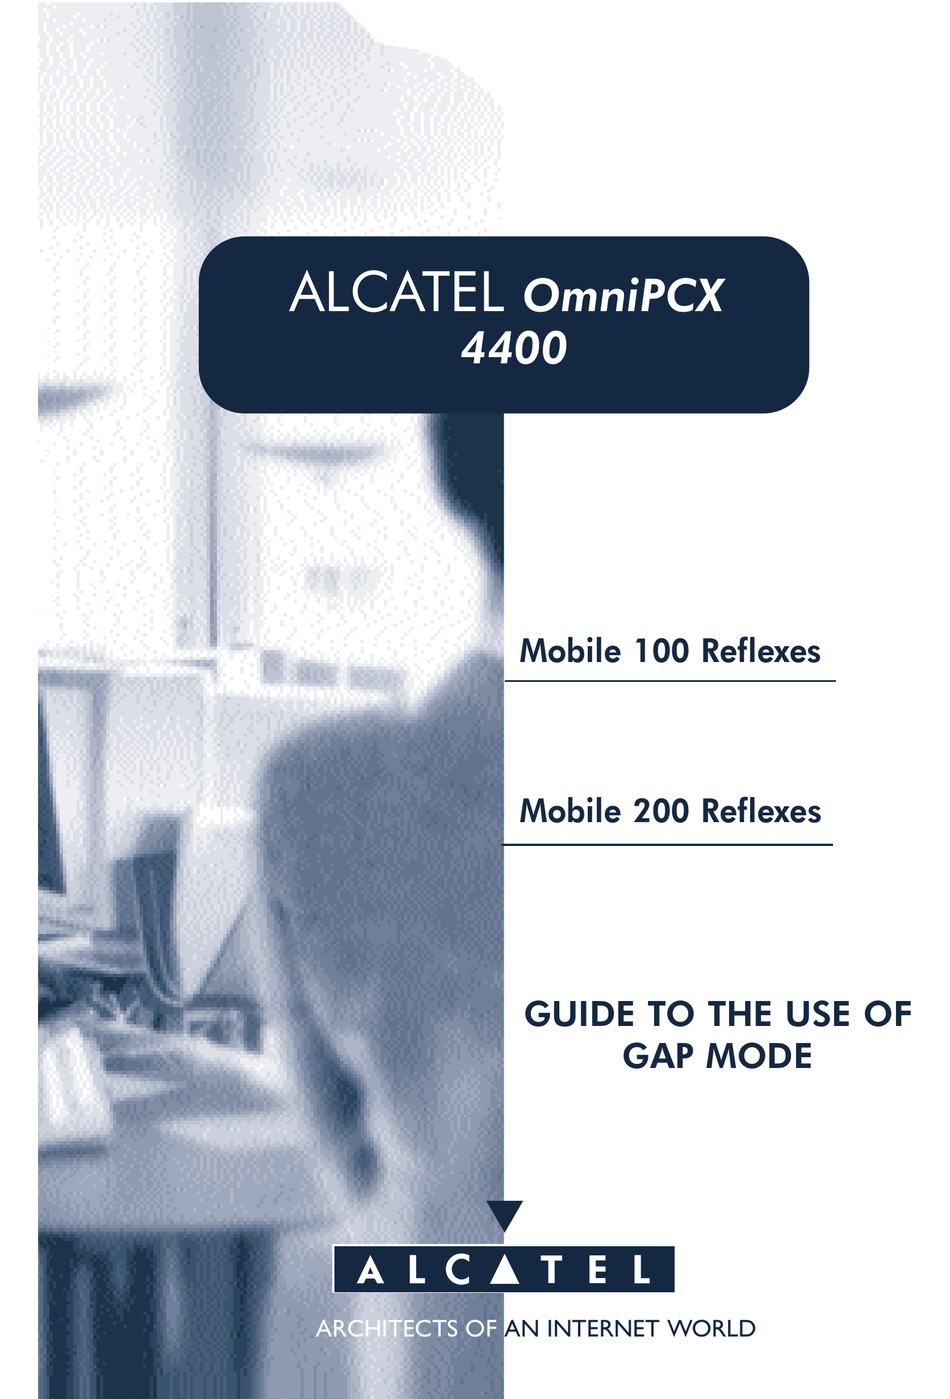 alcatel omnipcx 4400 software free download